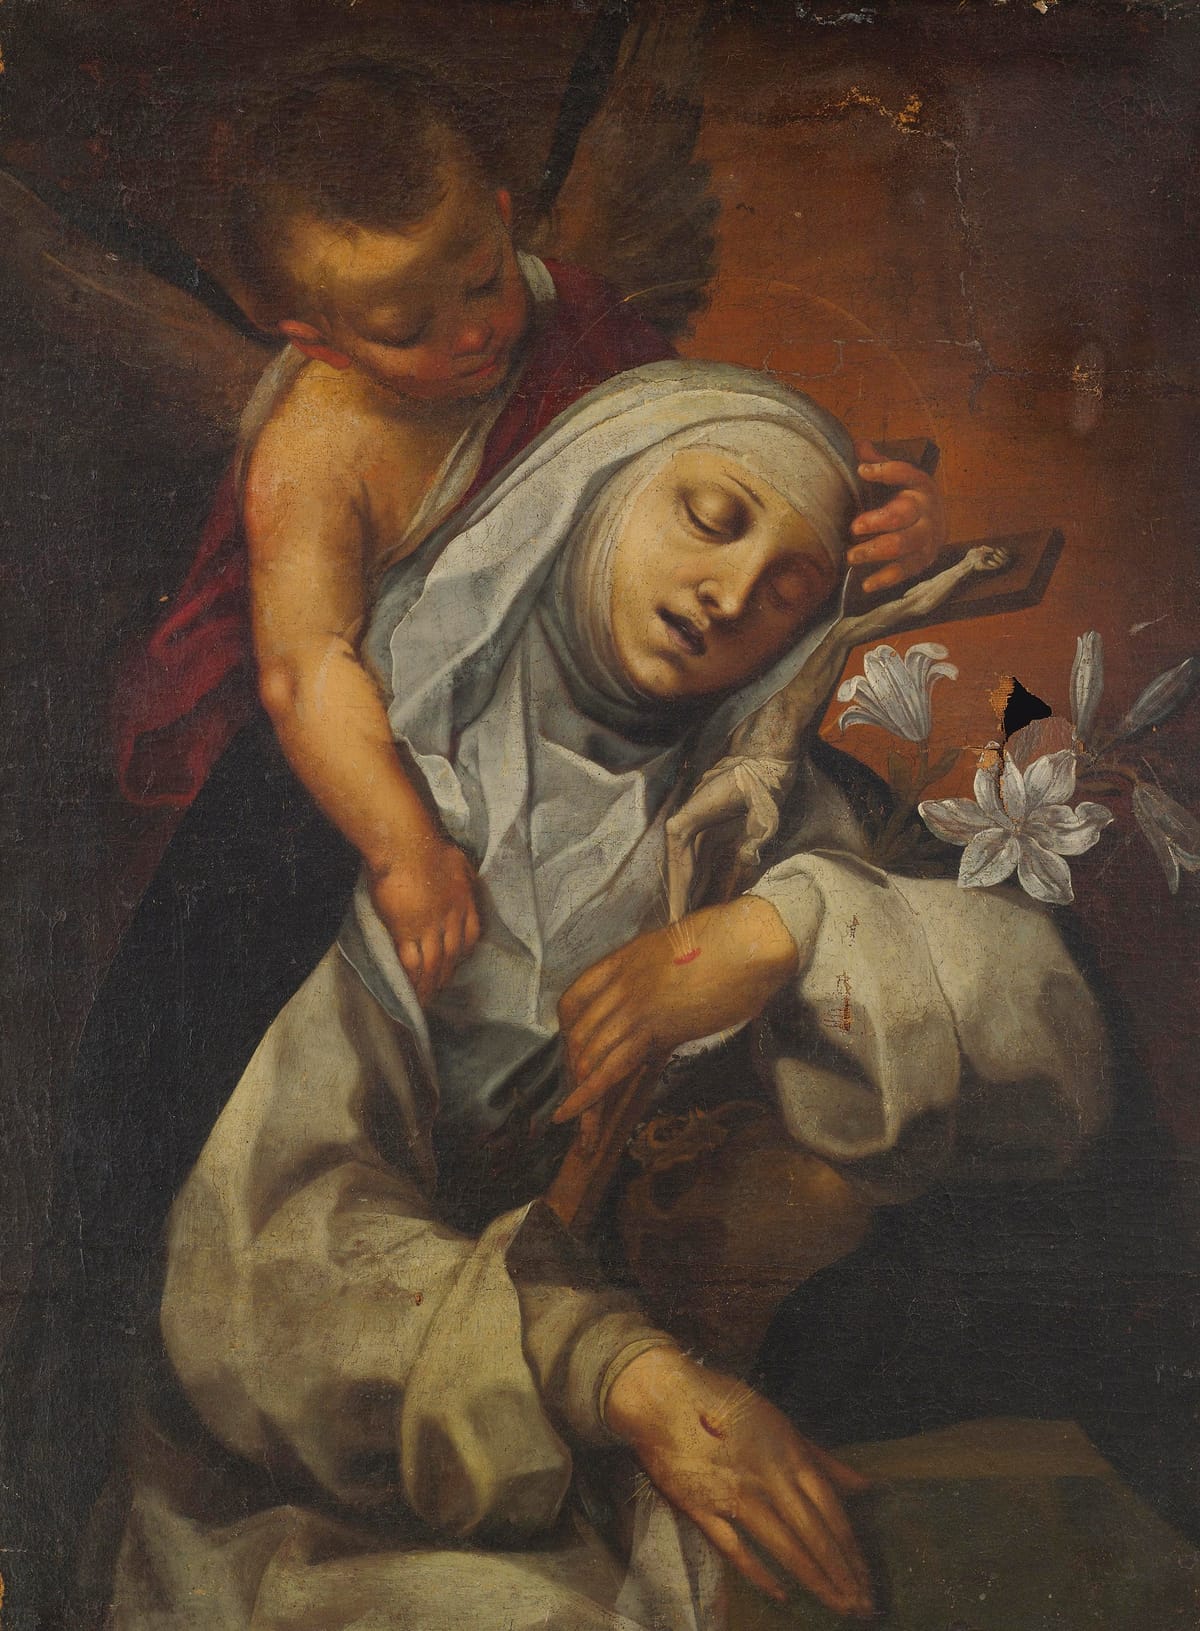 St. Catherine Of Siena by Francesco Vanni (Italian, 1563 - 1610) - Public Domain Catholic Painting